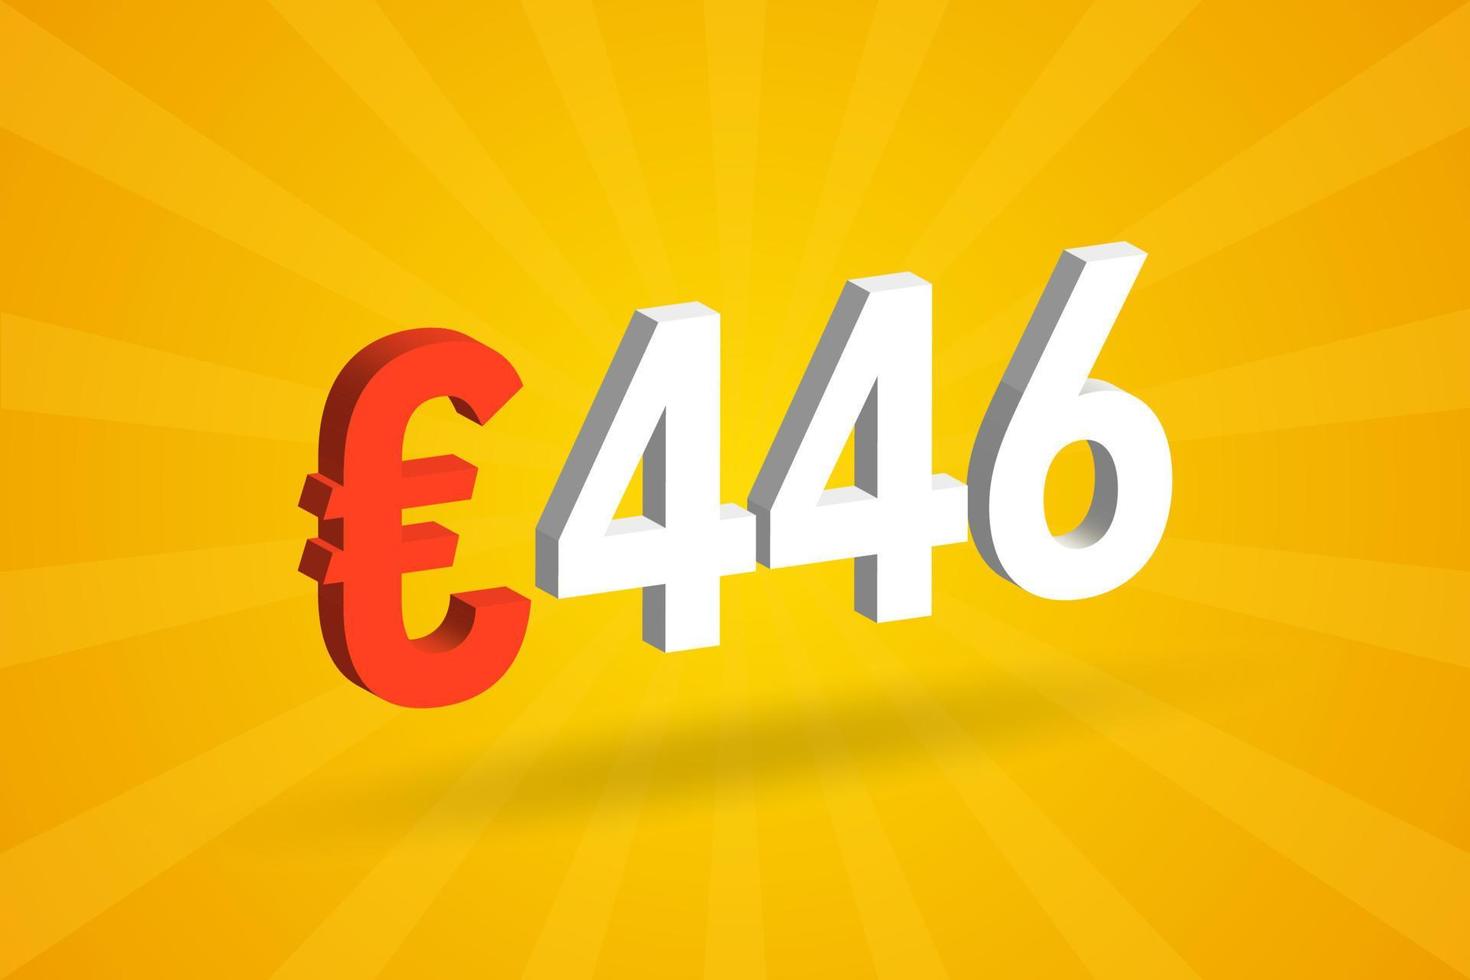 446 Euro Currency 3D vector text symbol. 3D 446 Euro European Union Money stock vector